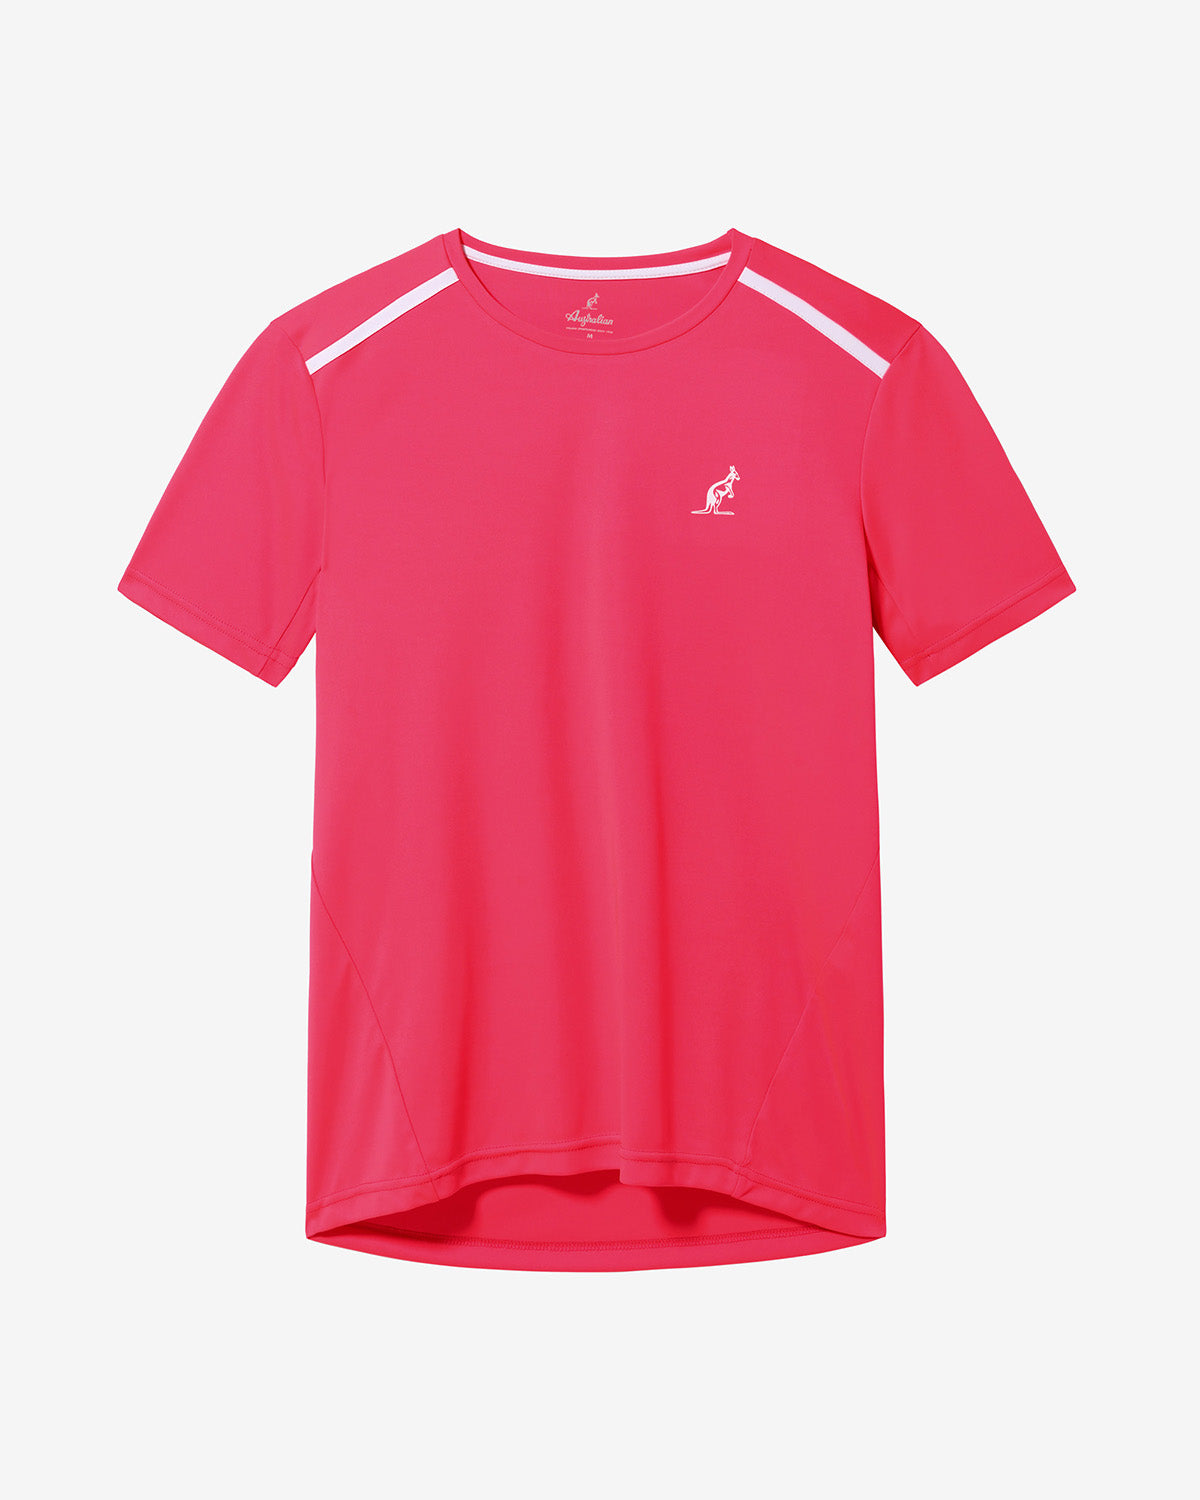 Need T-shirt: Australian Tennis